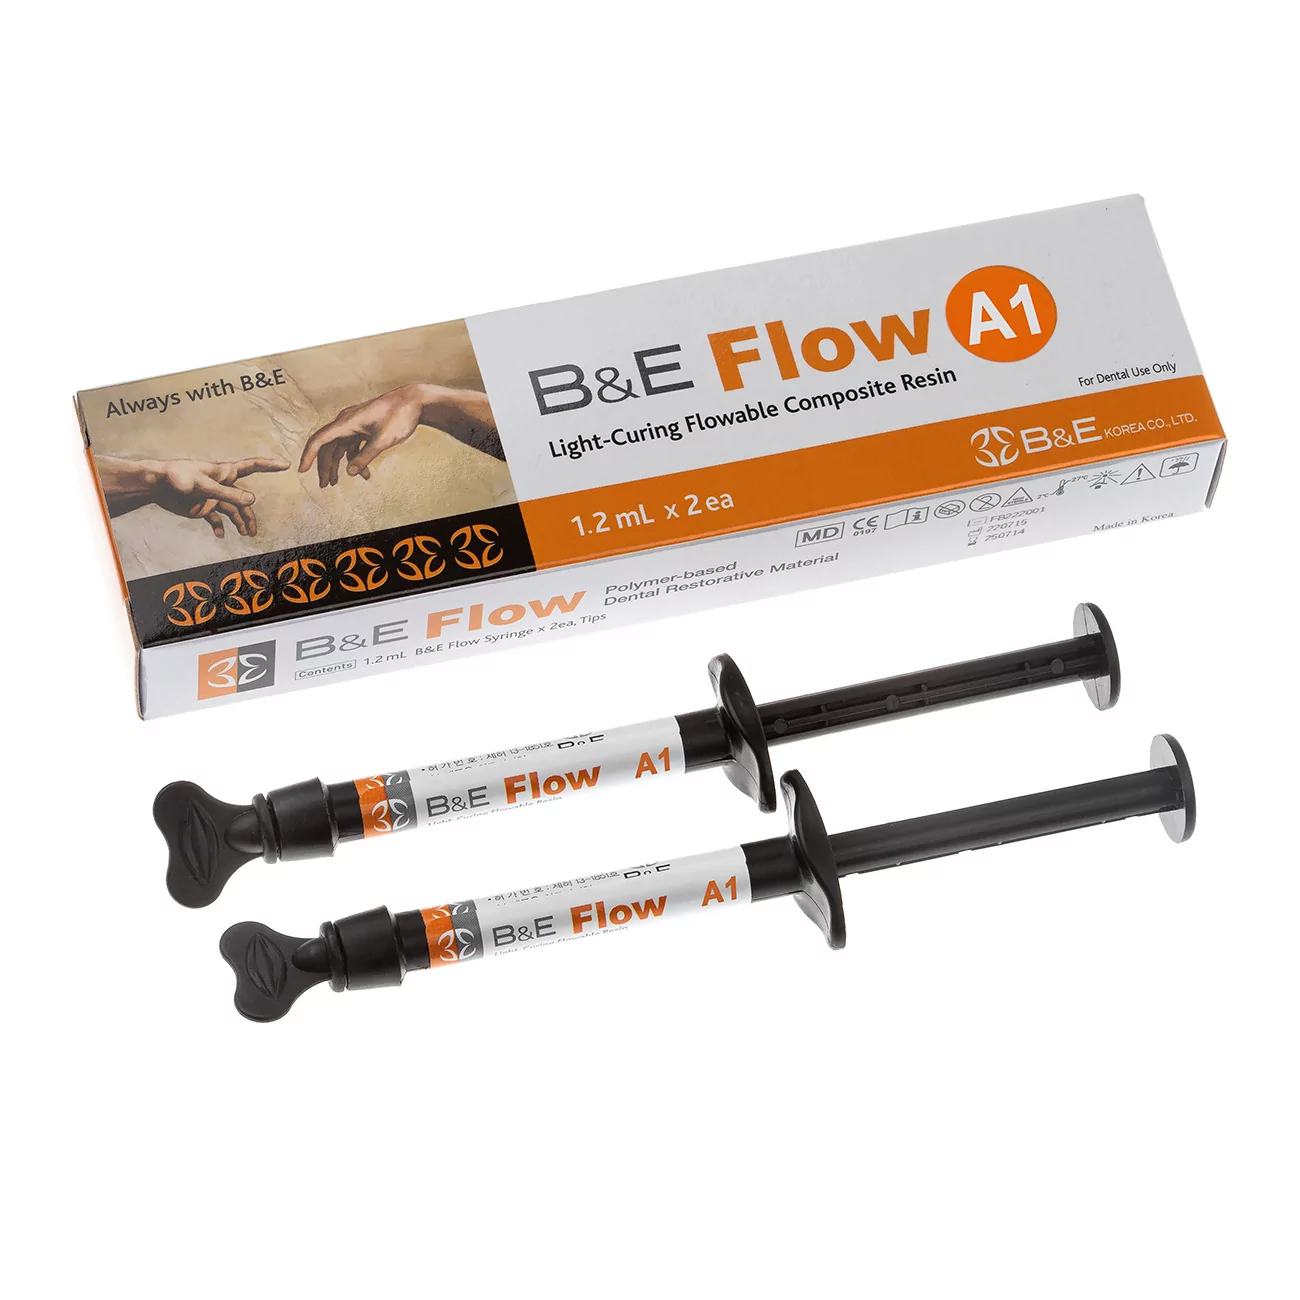 B&E Flow цвет A1 шприц 2гр.х2шт. Текучий светоотверждаемый композит, B&E Korea